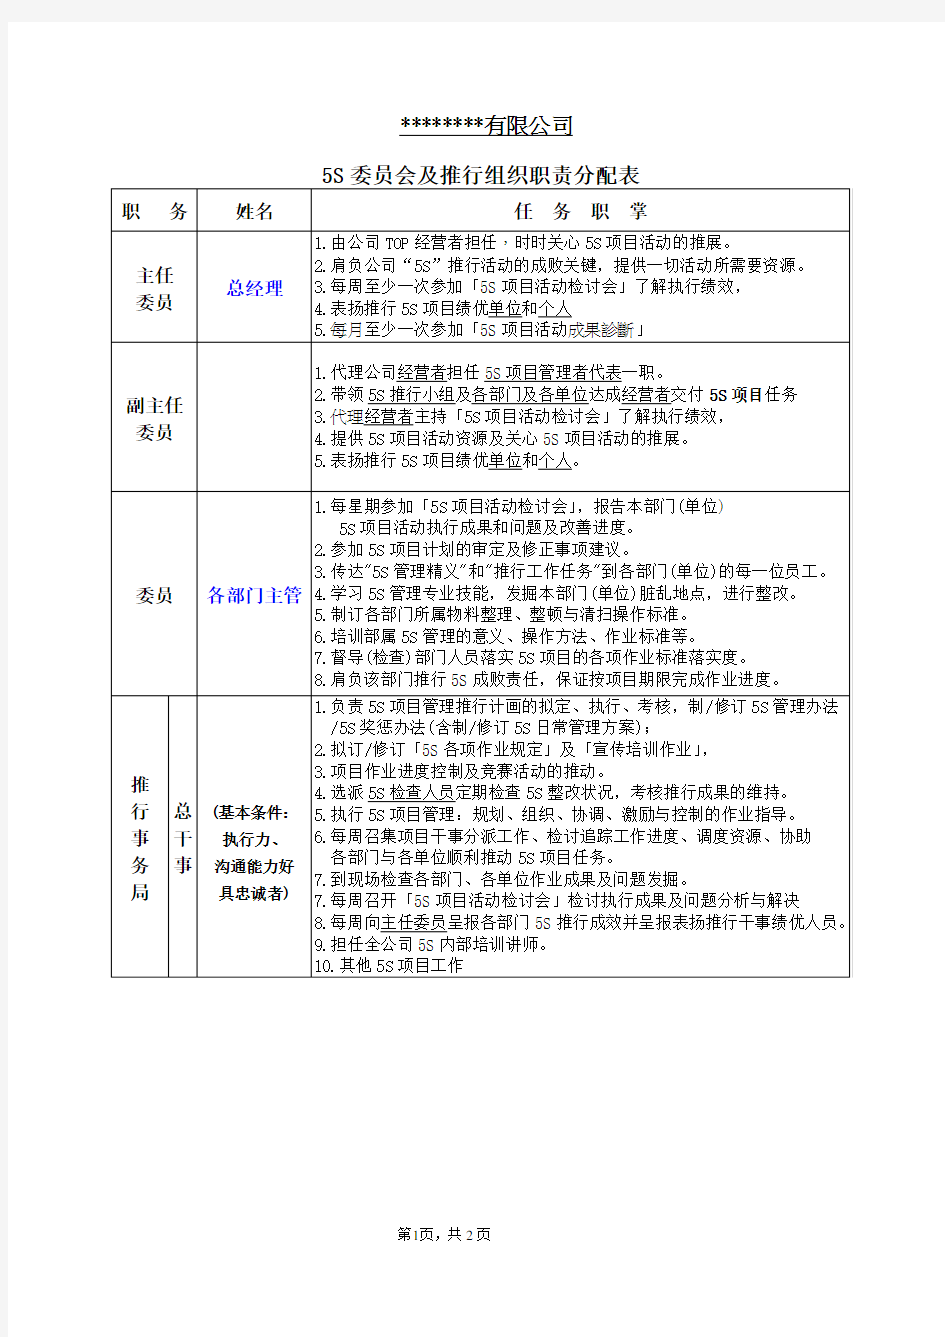 4-5S委员会及推动组职责分配表